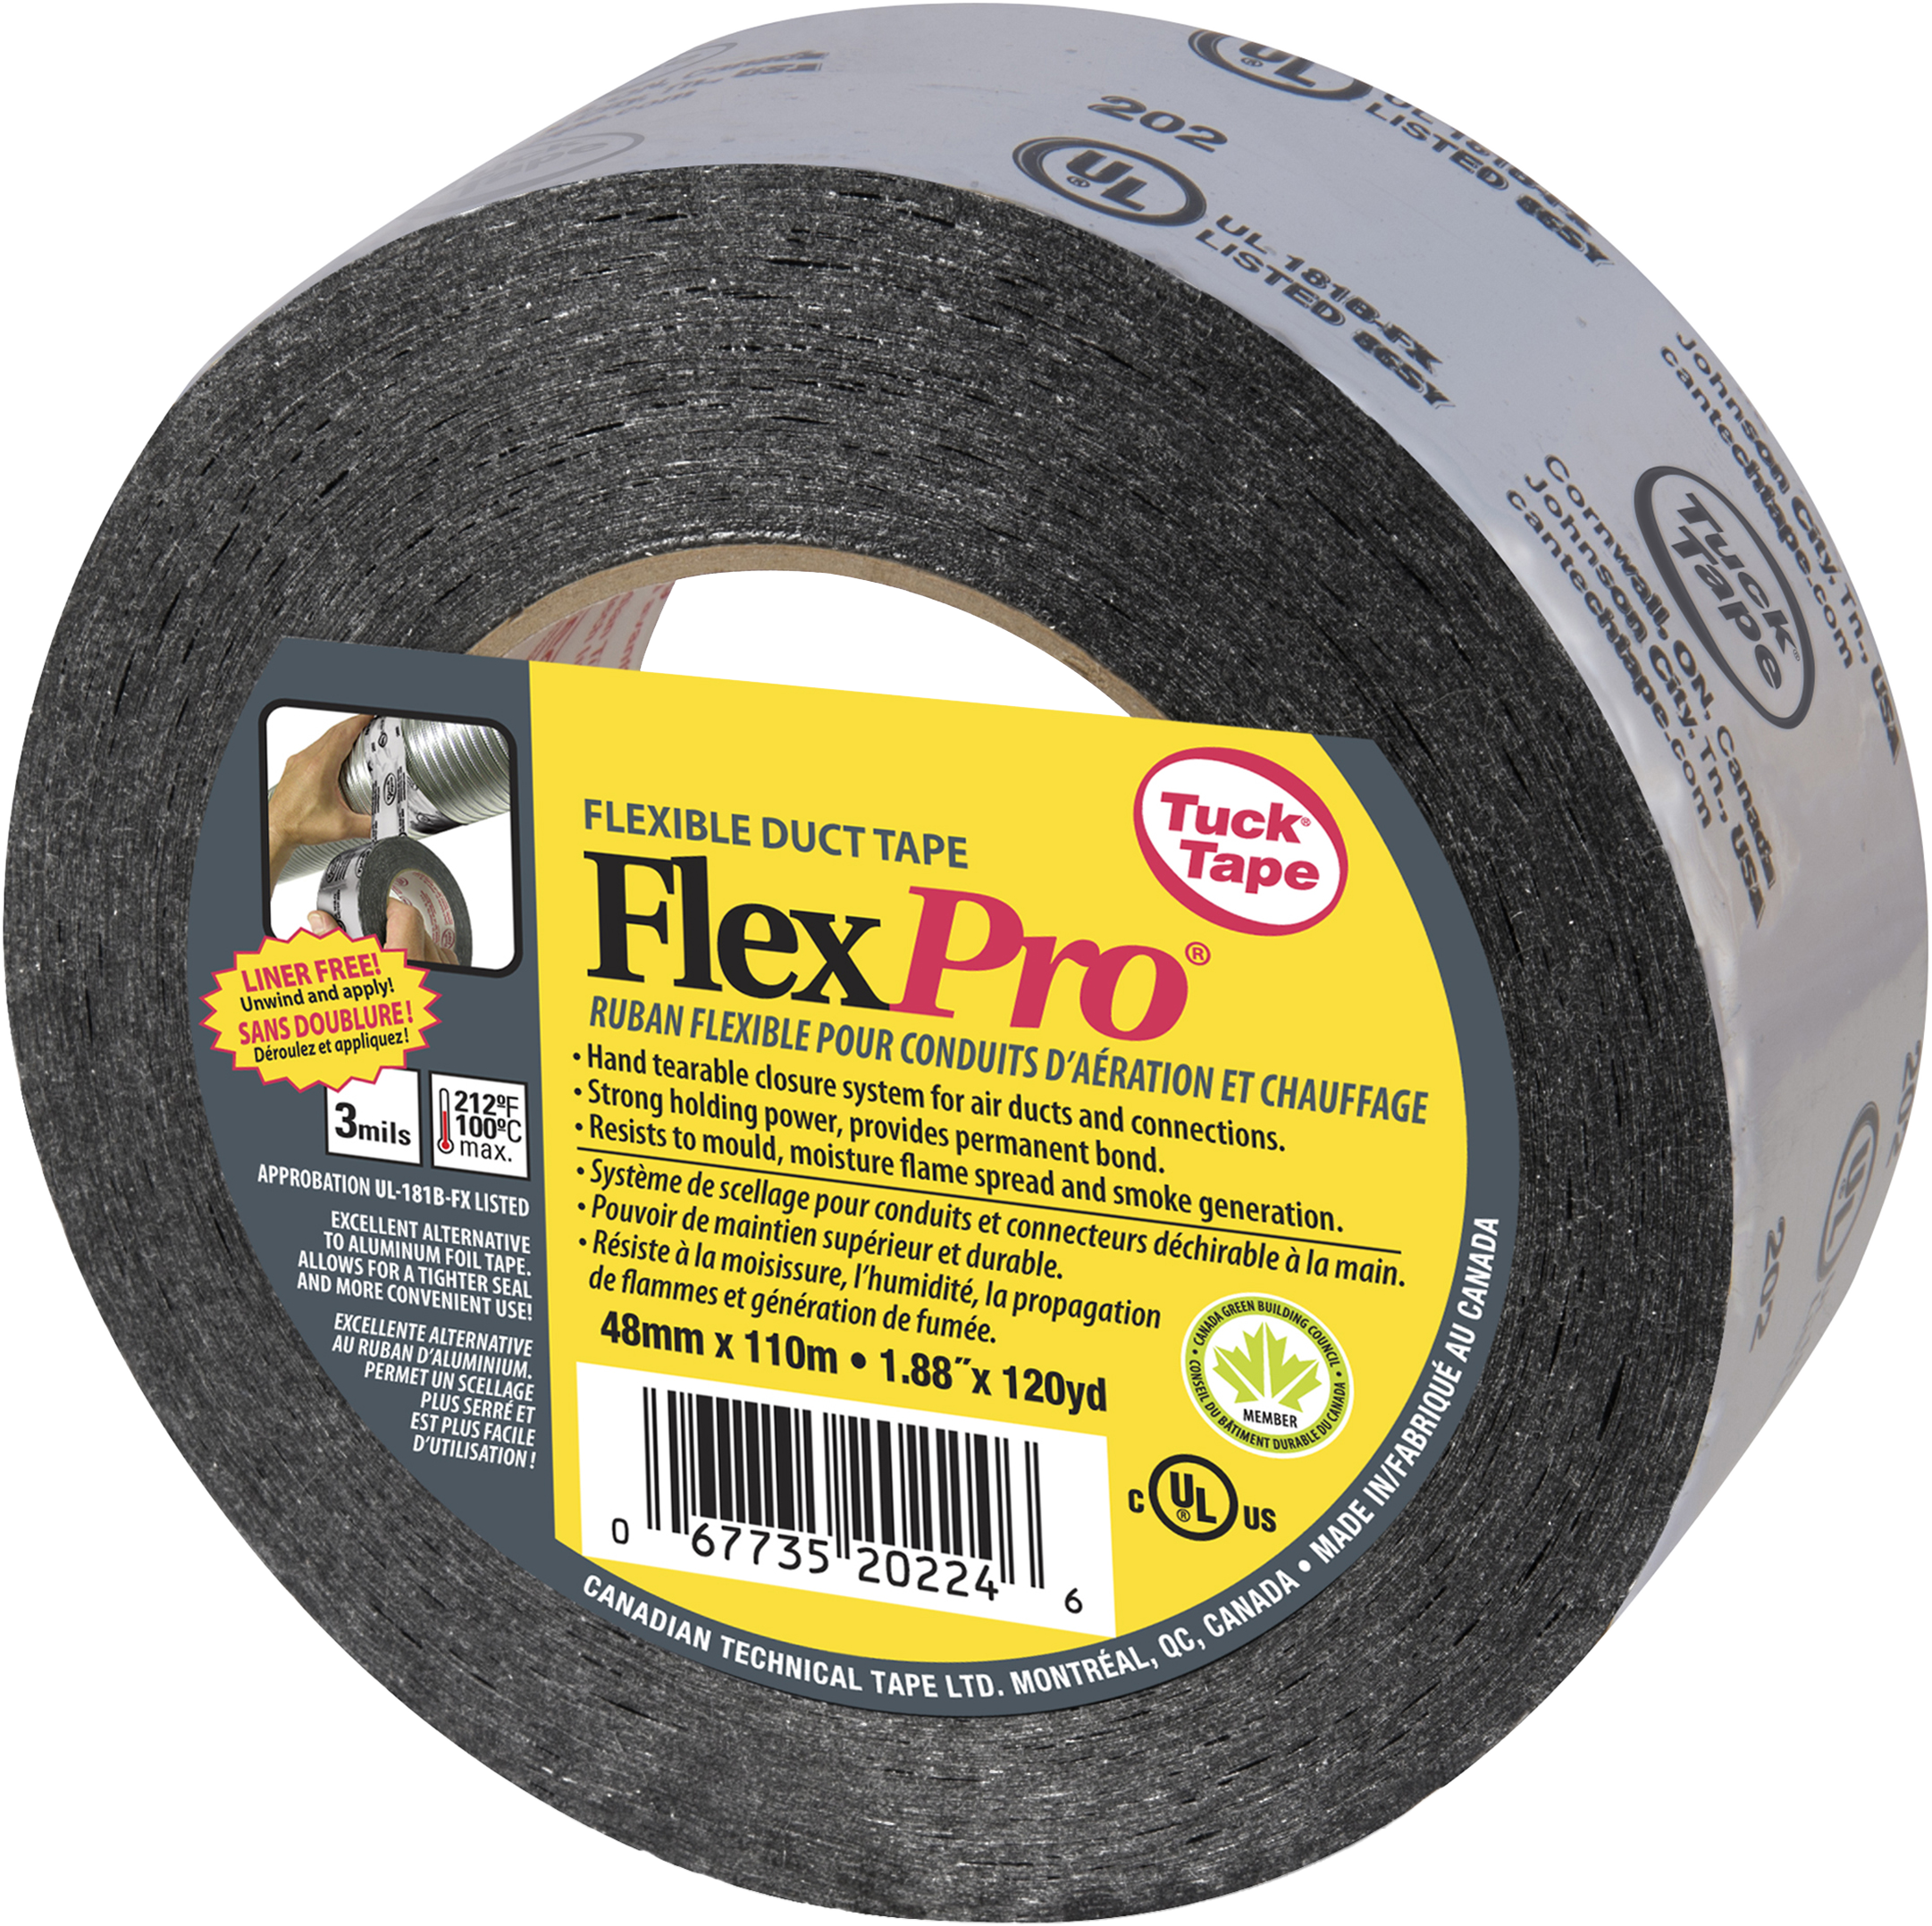 FlexPro Flexible Duct Tape